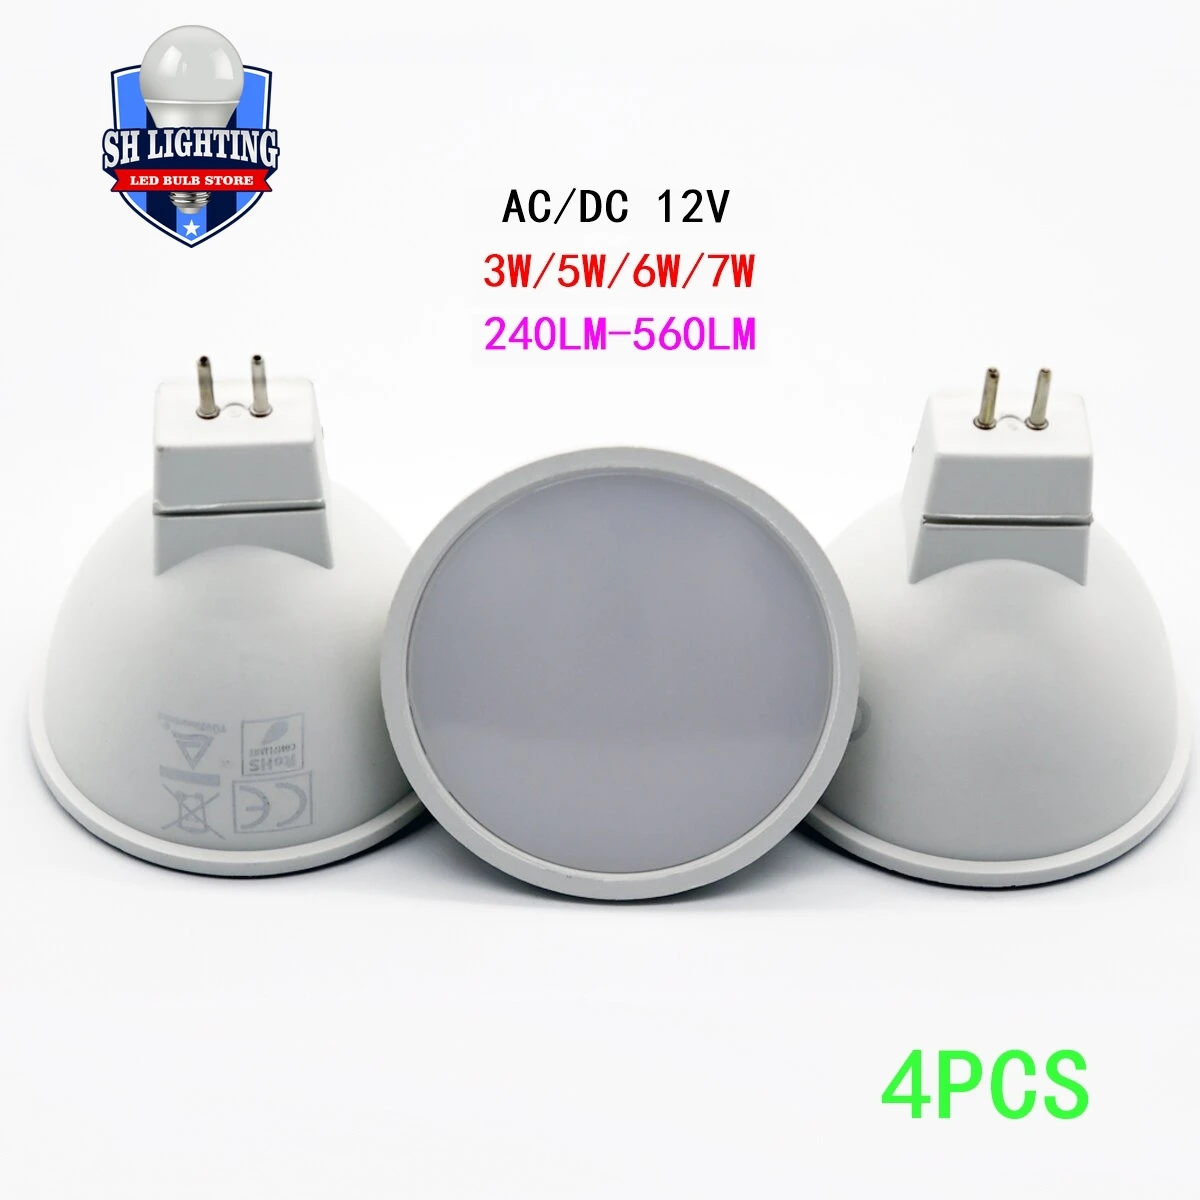 

4PCS LED Spotlight MR16 GU5.3 low pressure AC/DC 12V 3W 5W 6W 7W Light Angle 120 degrees Warm White Day Light LED Light Lamp